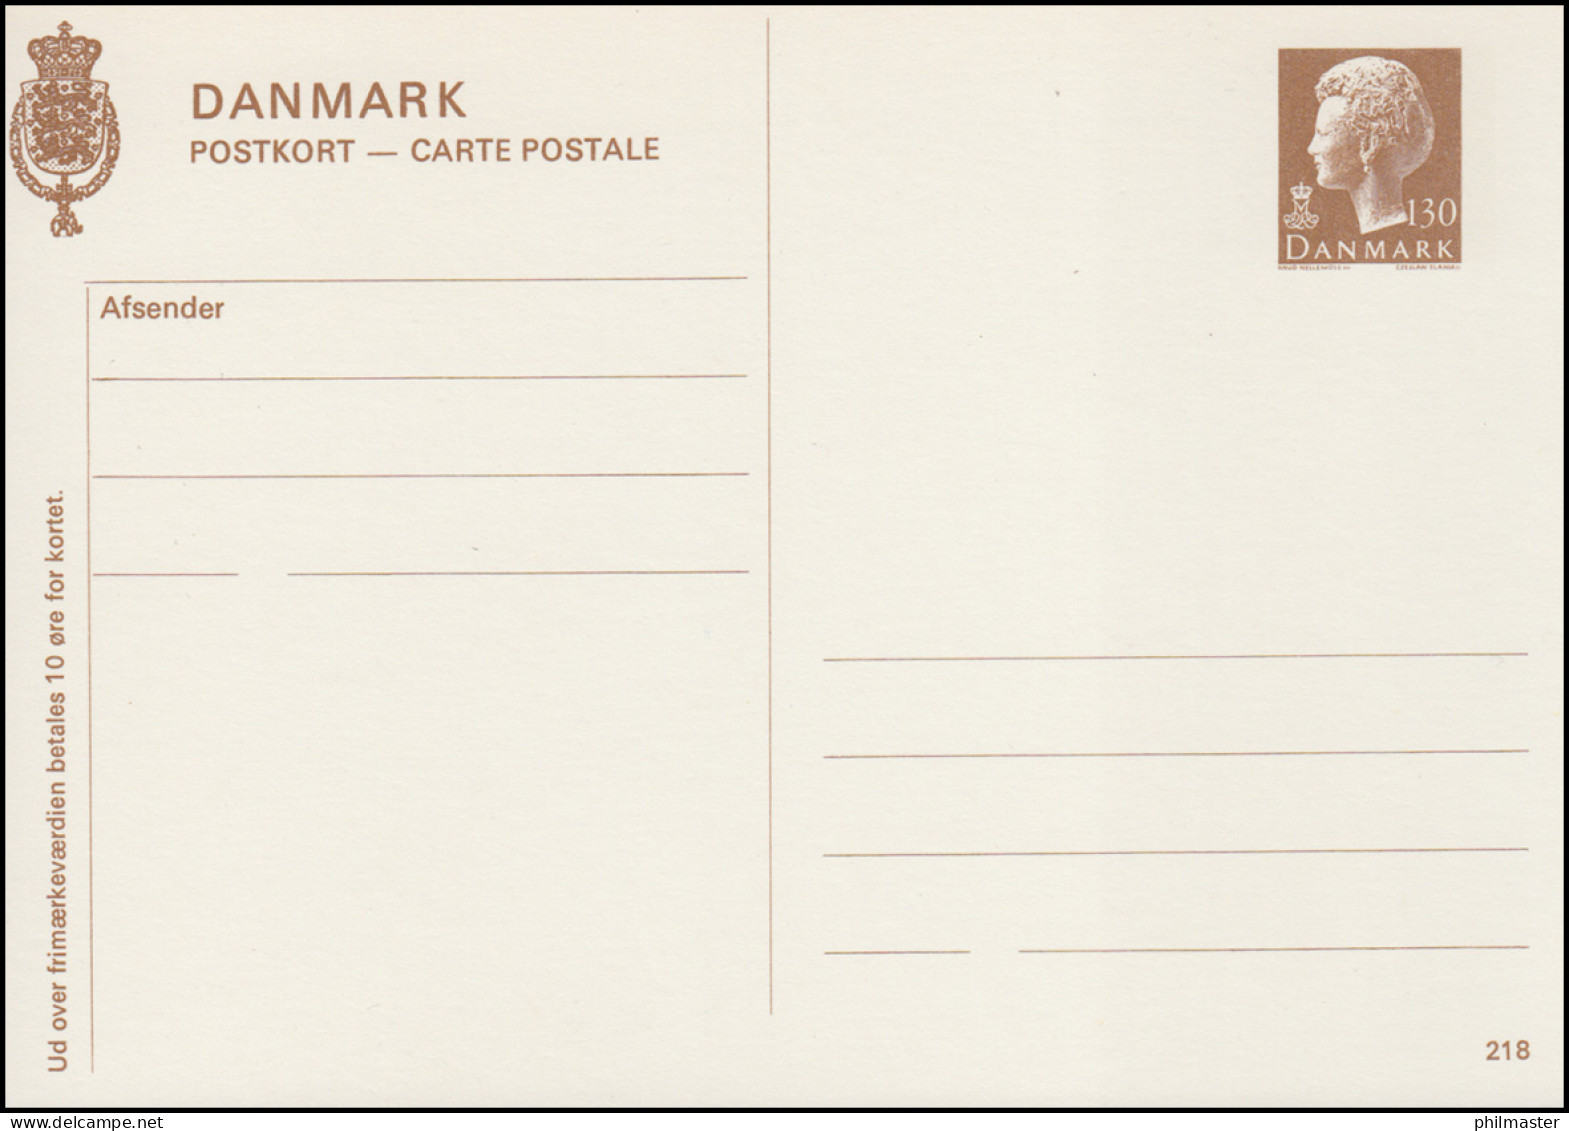 Dänemark Postkarte P 276 Königin Margrethe 130 Öre, Kz. 218, ** - Enteros Postales